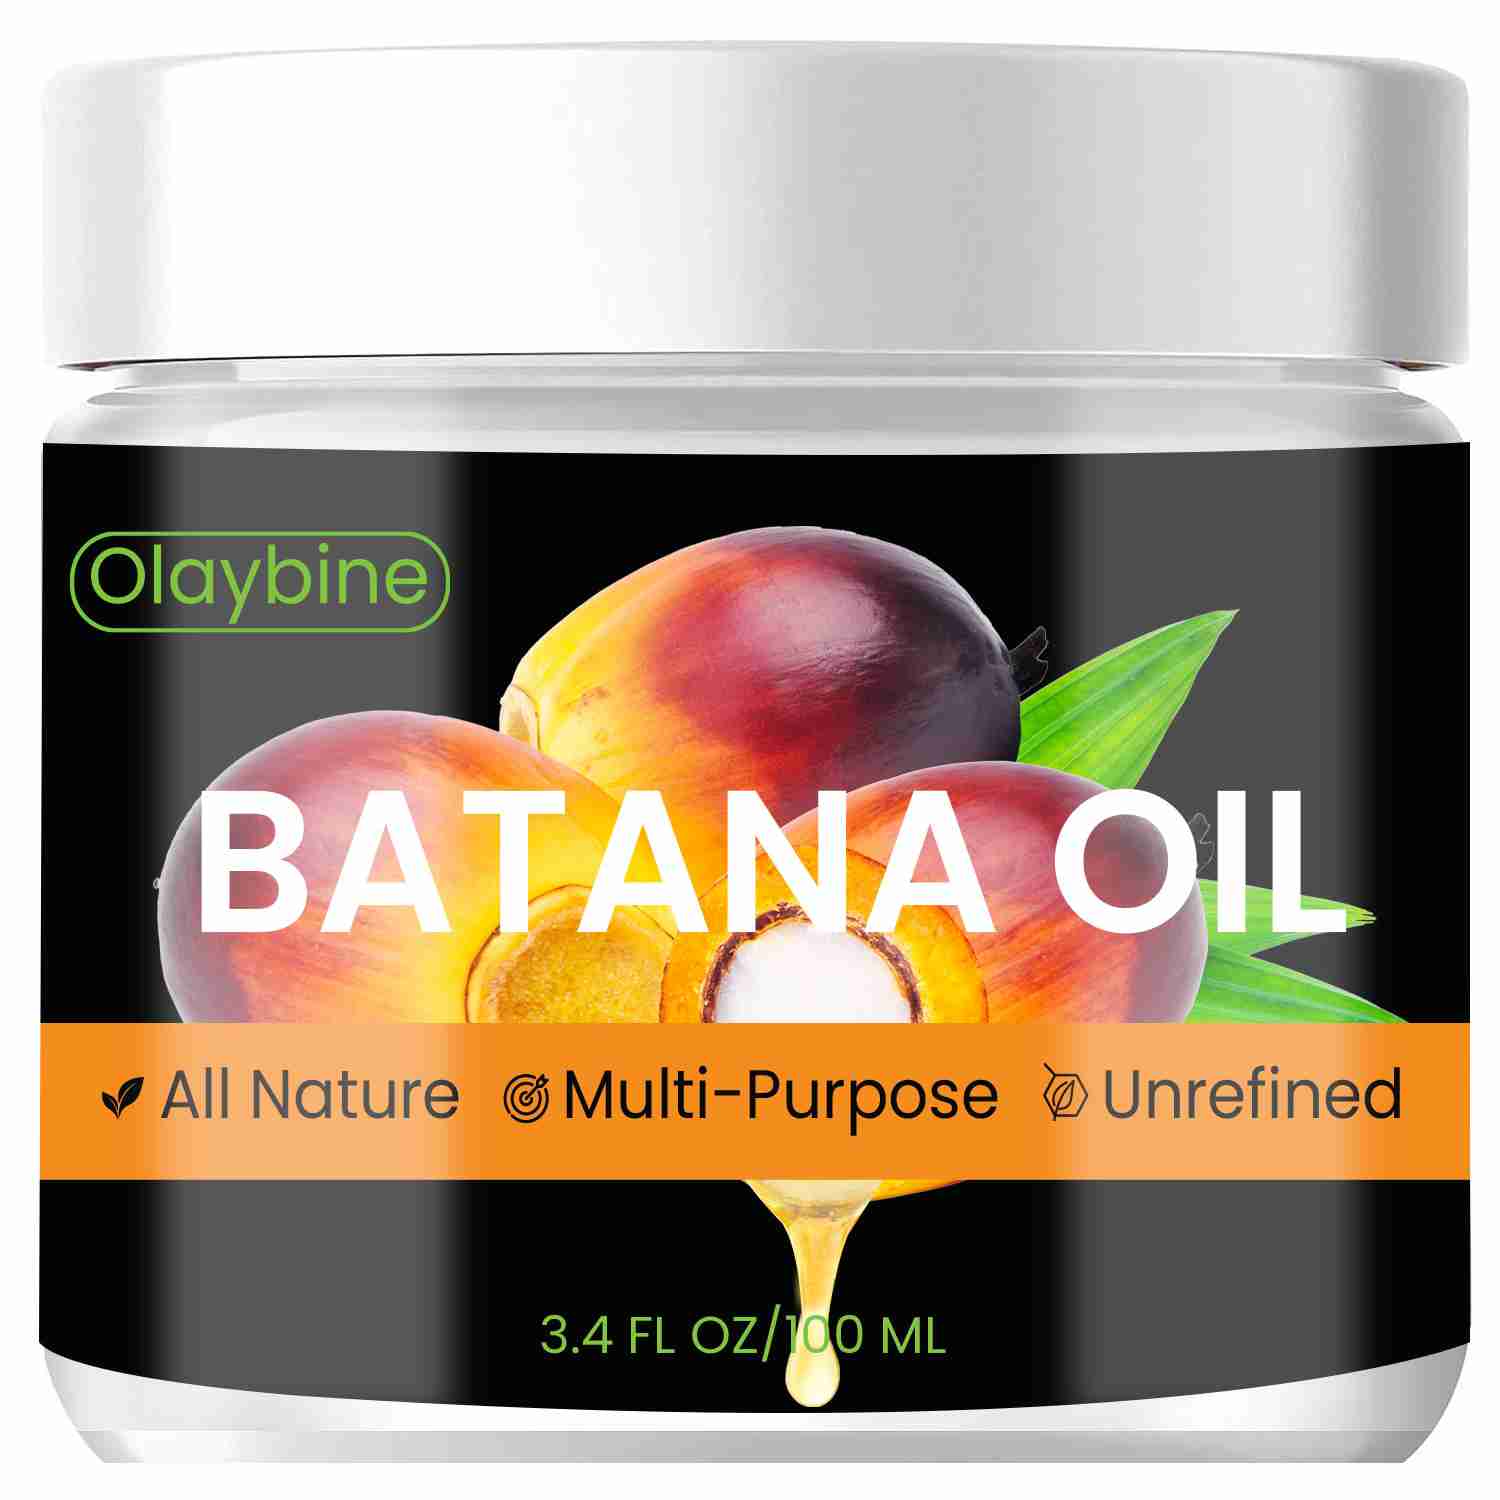 batana-oil-for-hair-growth with cash back rebate